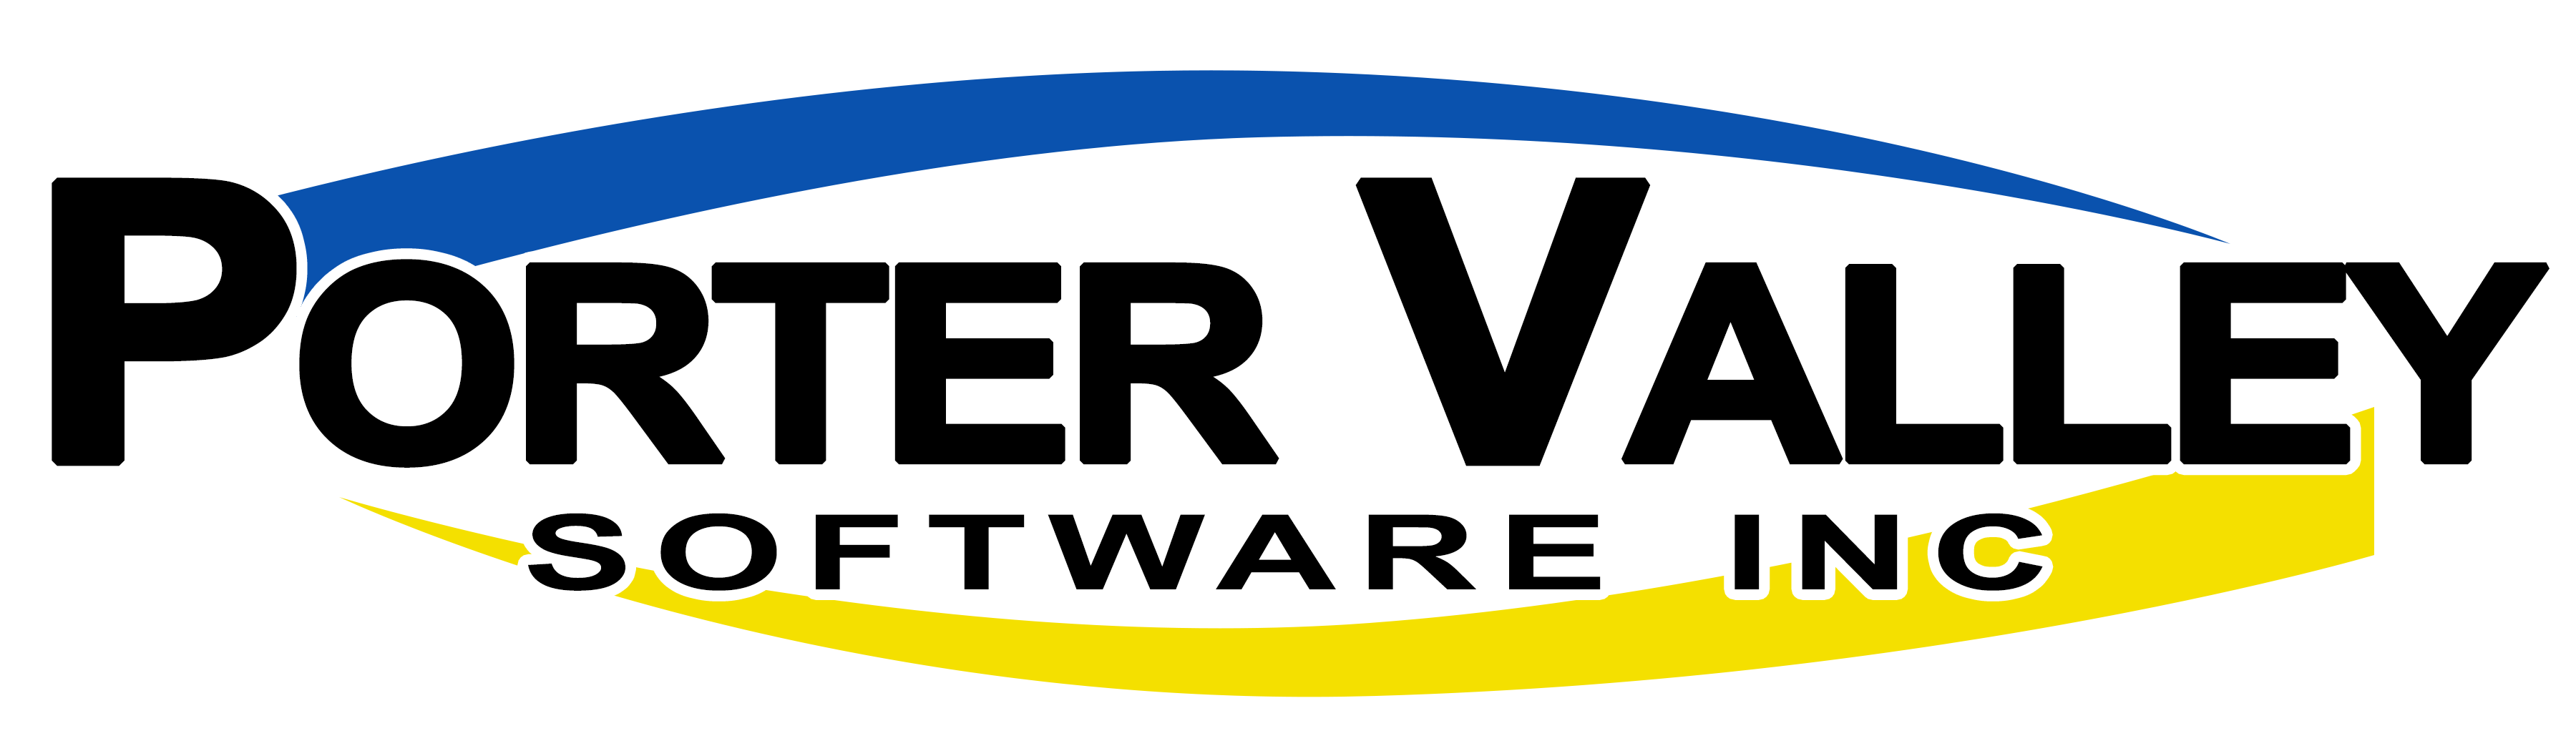 Porter Valley Software Inc